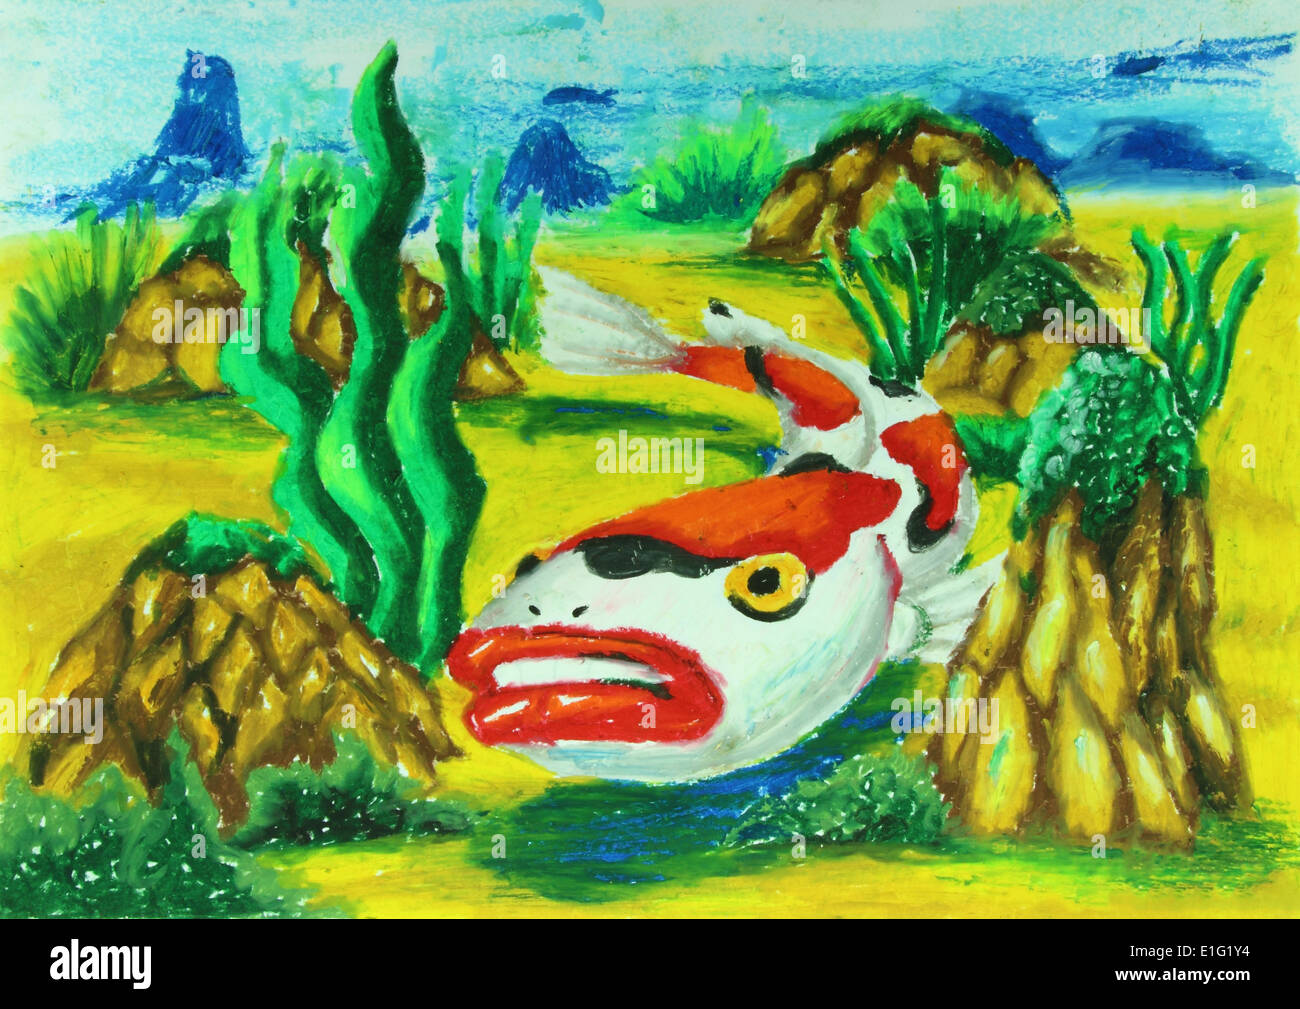 koi fish swiming in water painting background Stock Photo